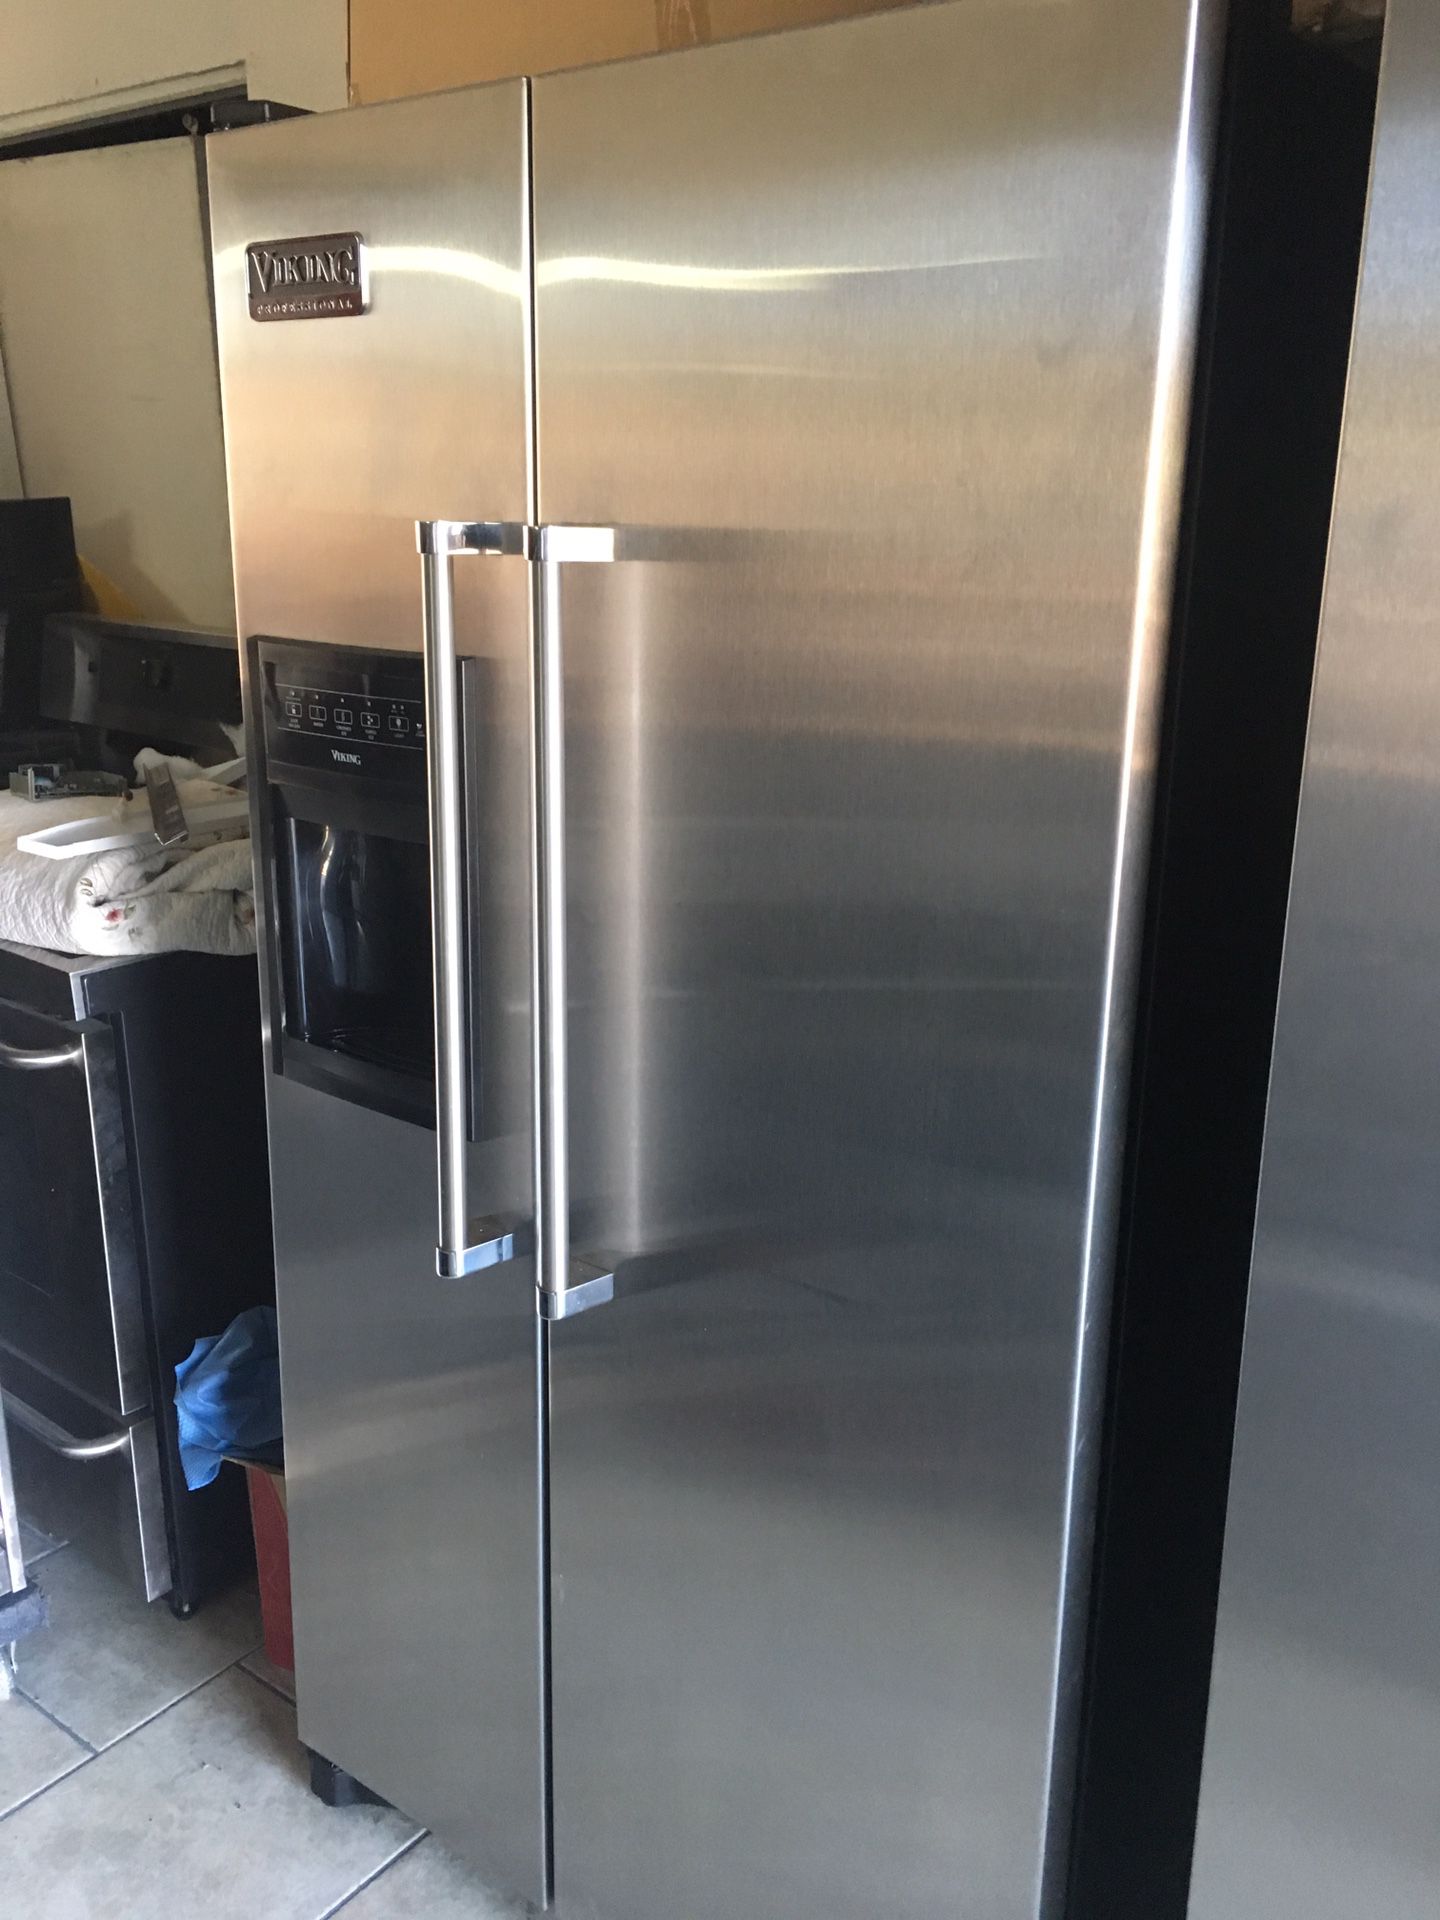 Viking refrigerator side by side 36”W